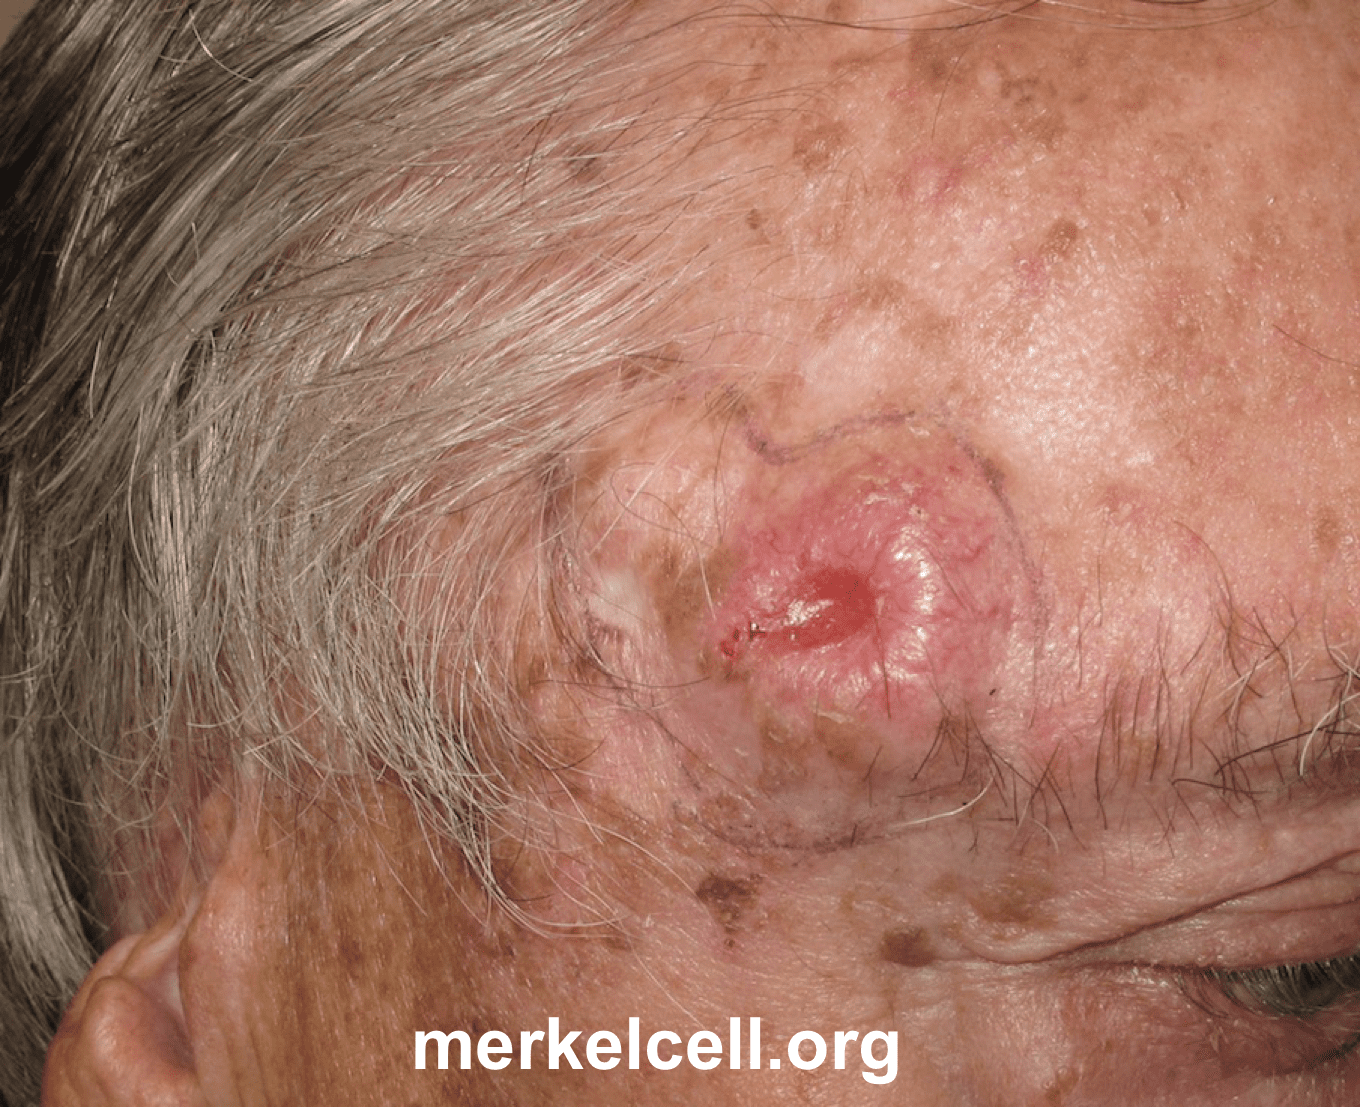 Clinical Photos Of Merkel Cell Carcinoma